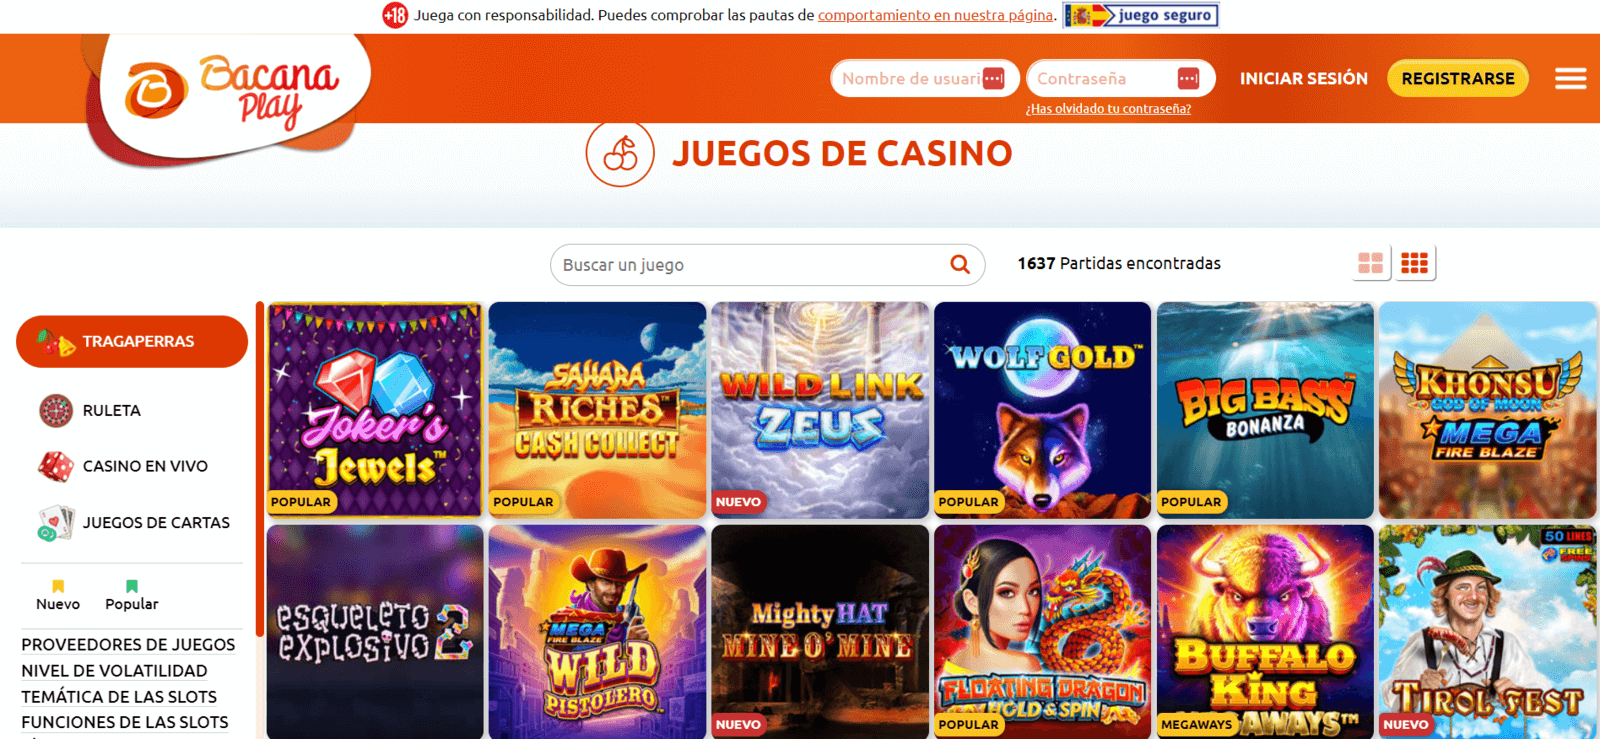 Tragaperras de Bacanaplay Casino online en España 